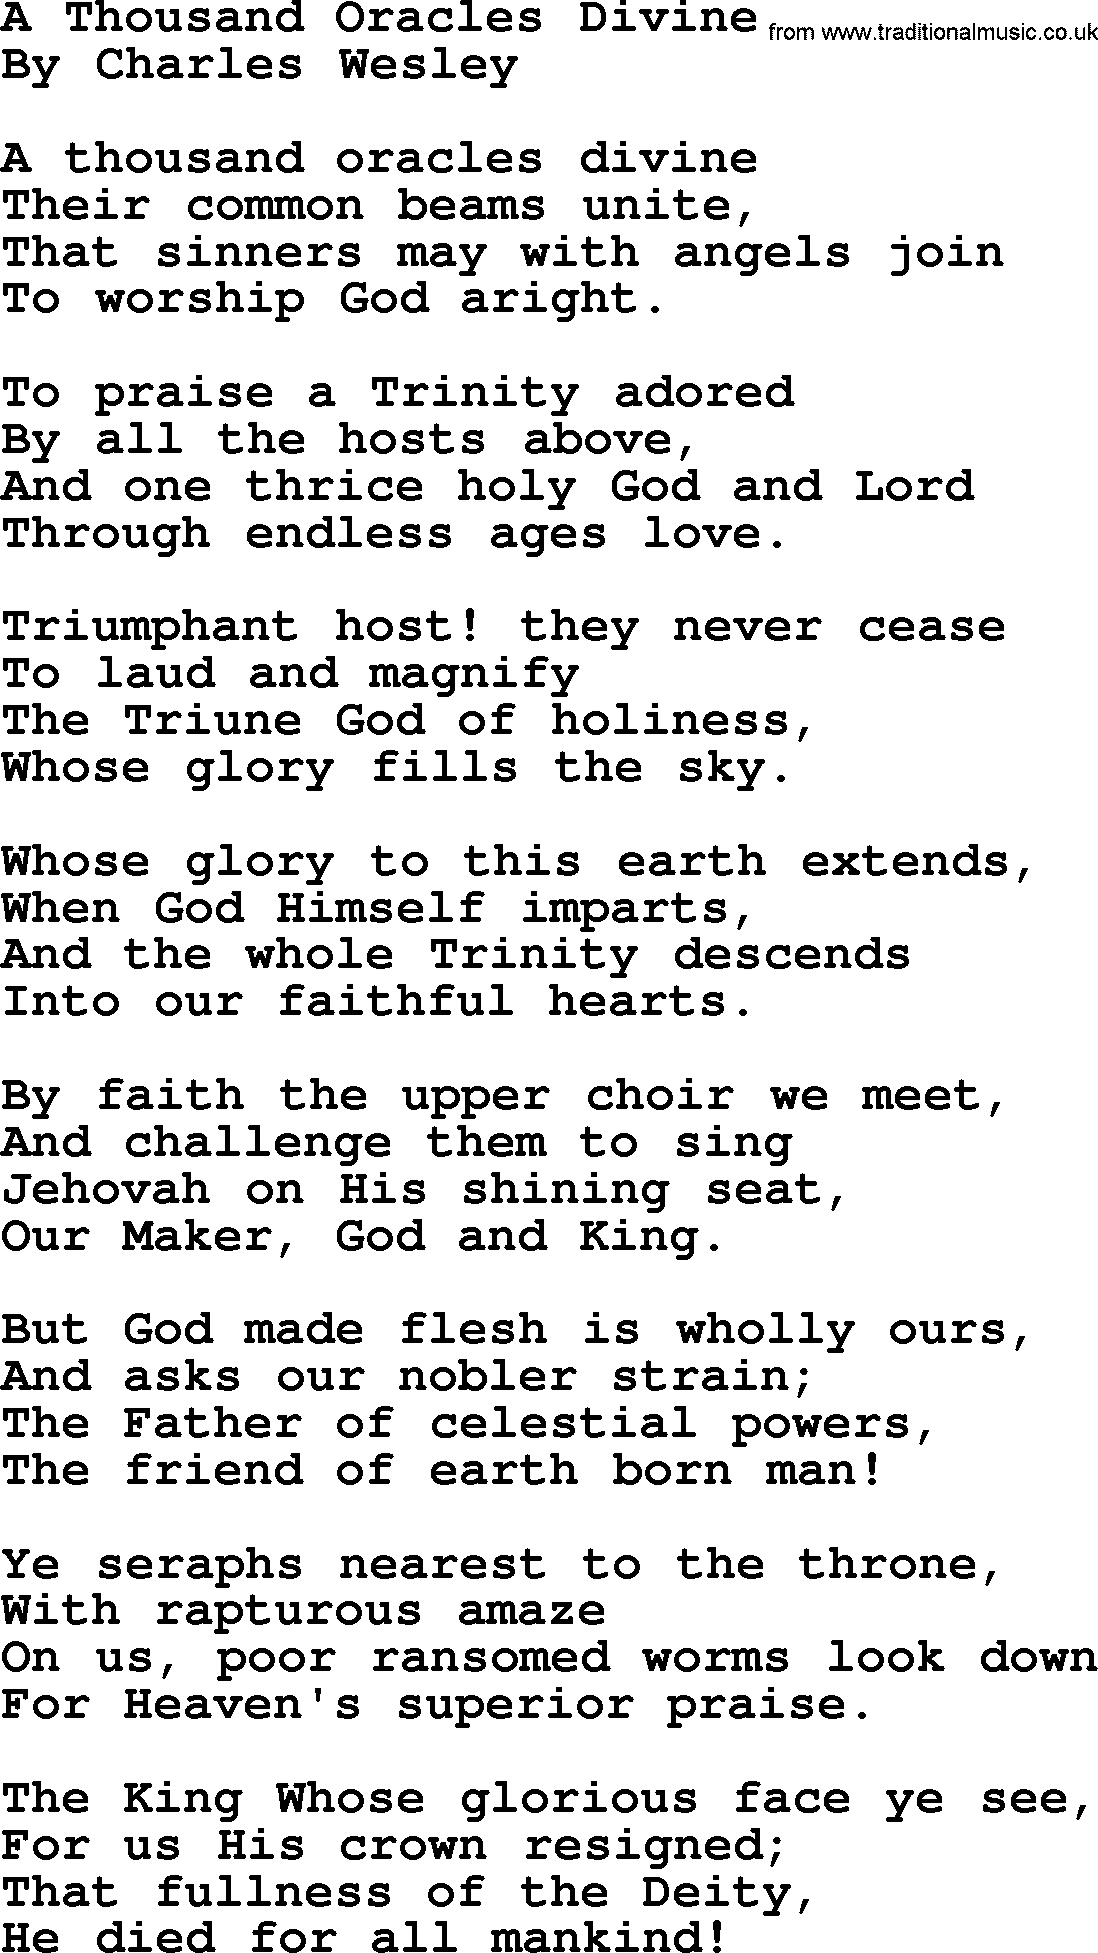 Charles Wesley hymn: A Thousand Oracles Divine, lyrics